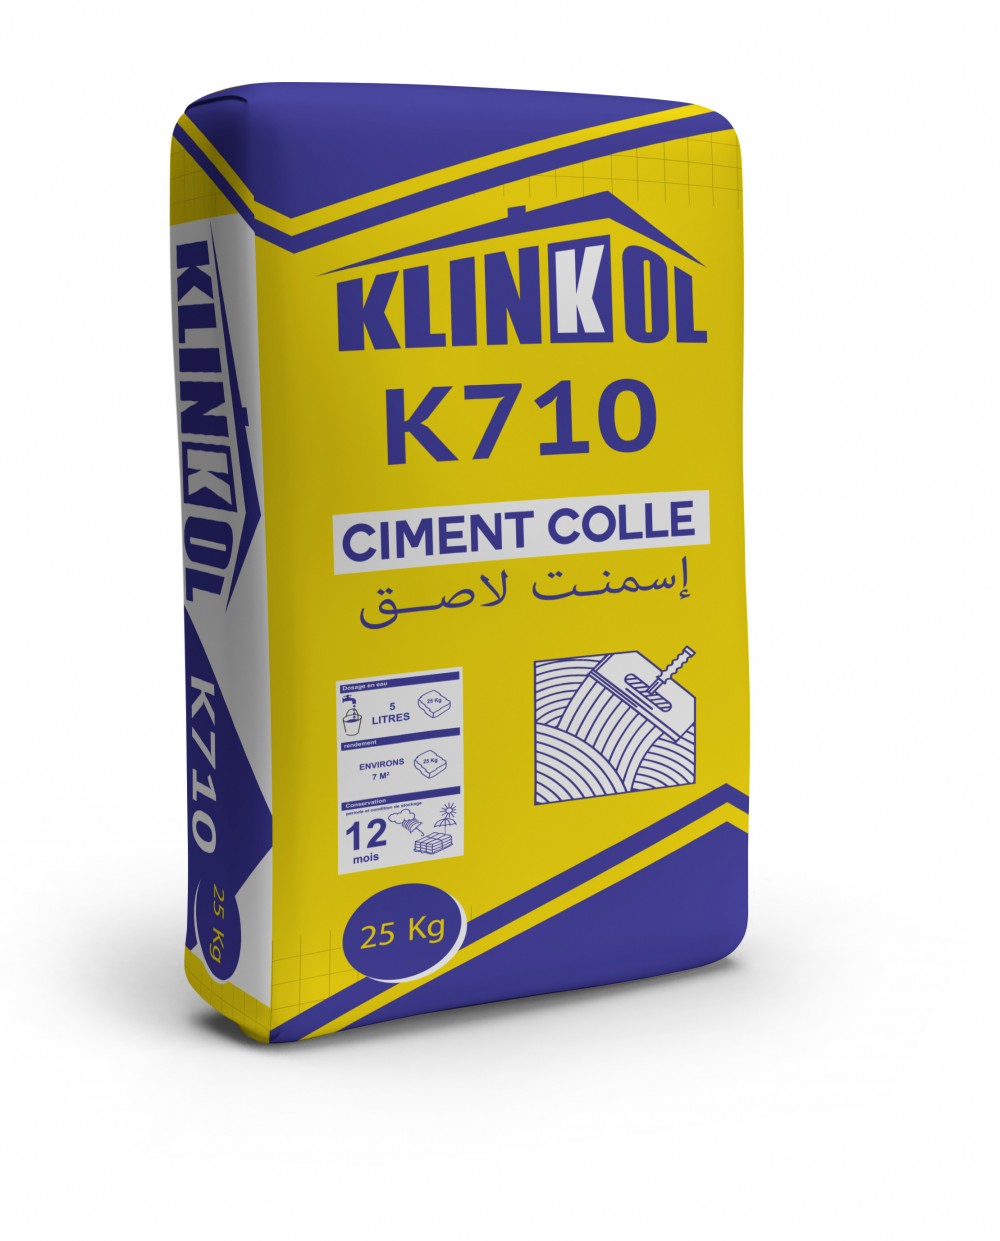 Ciment colle K710